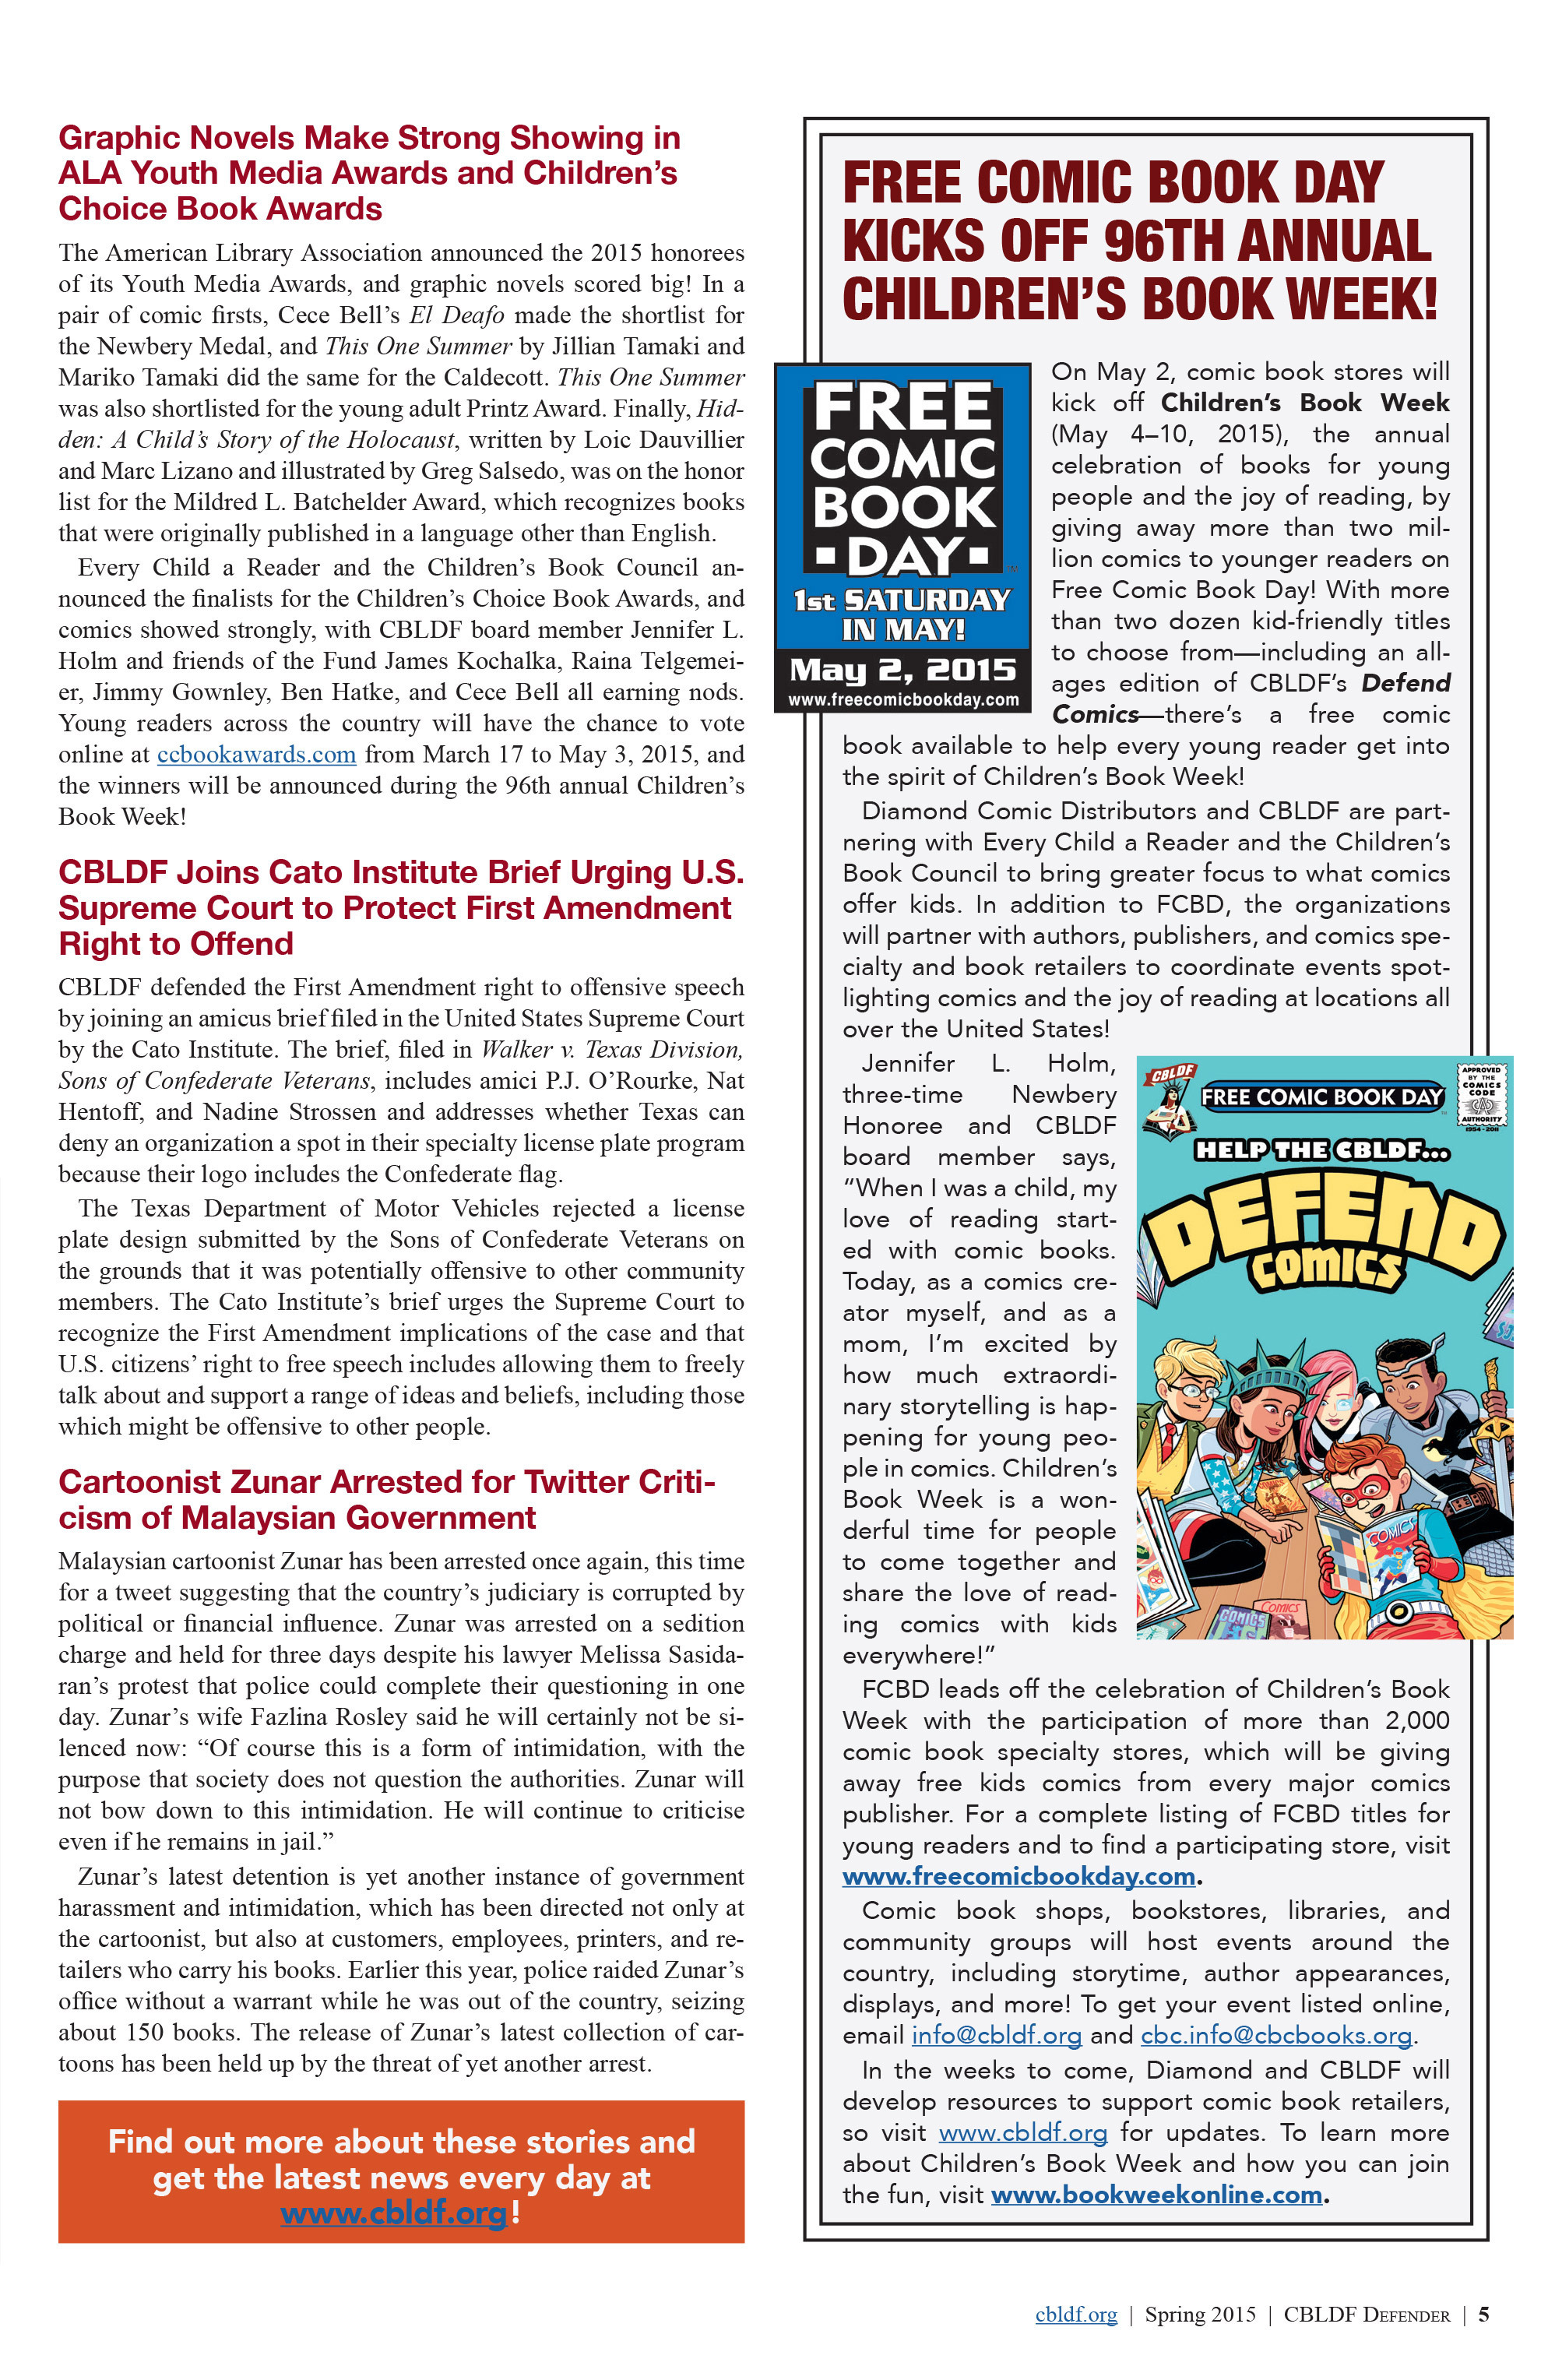 Read online CBLDF Defender comic -  Issue #1 - 5